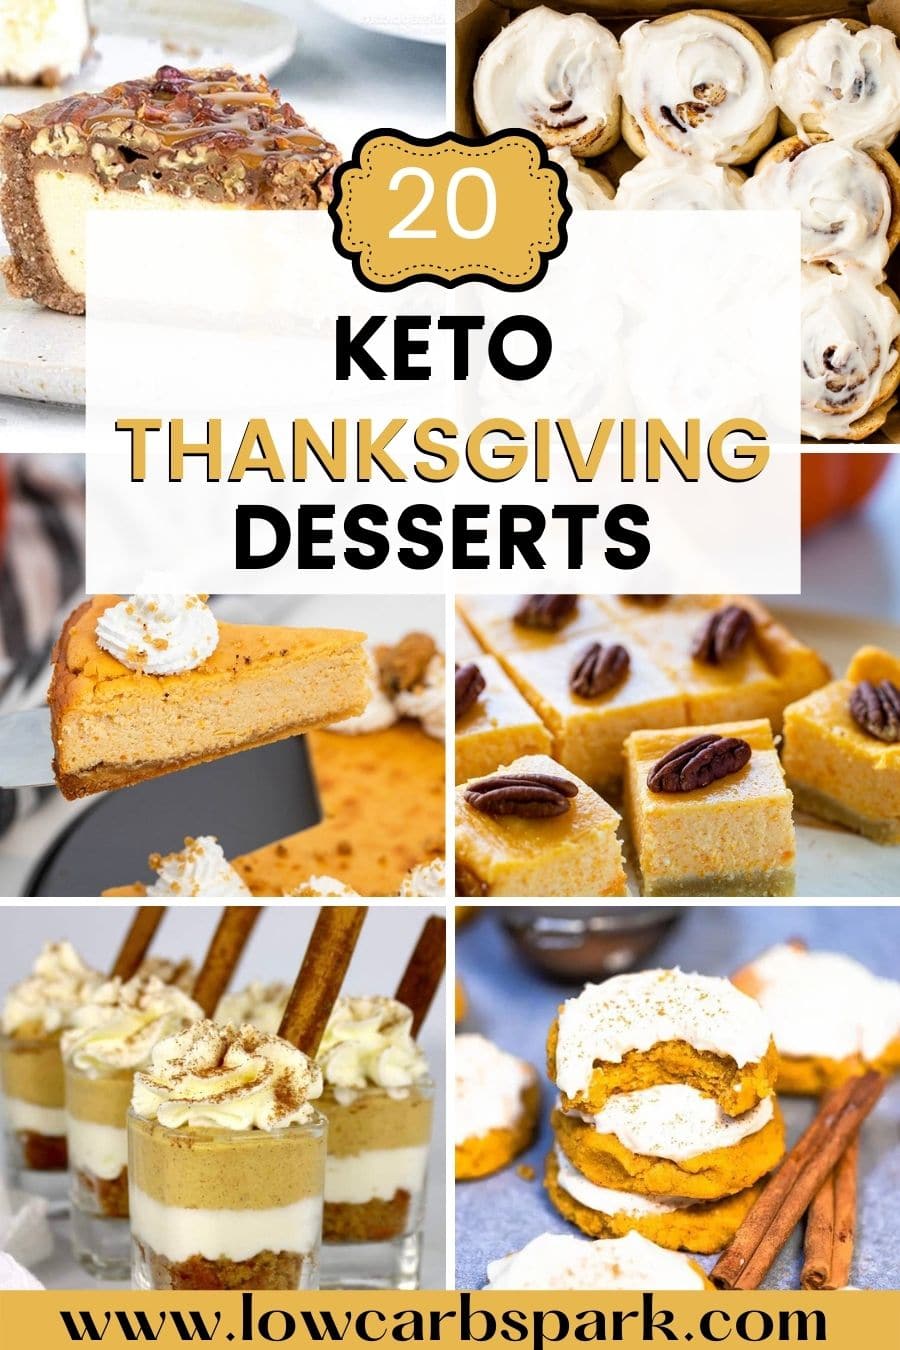 20+ Keto Thanksgiving Desserts Recipes - Festive Low Carb Desserts